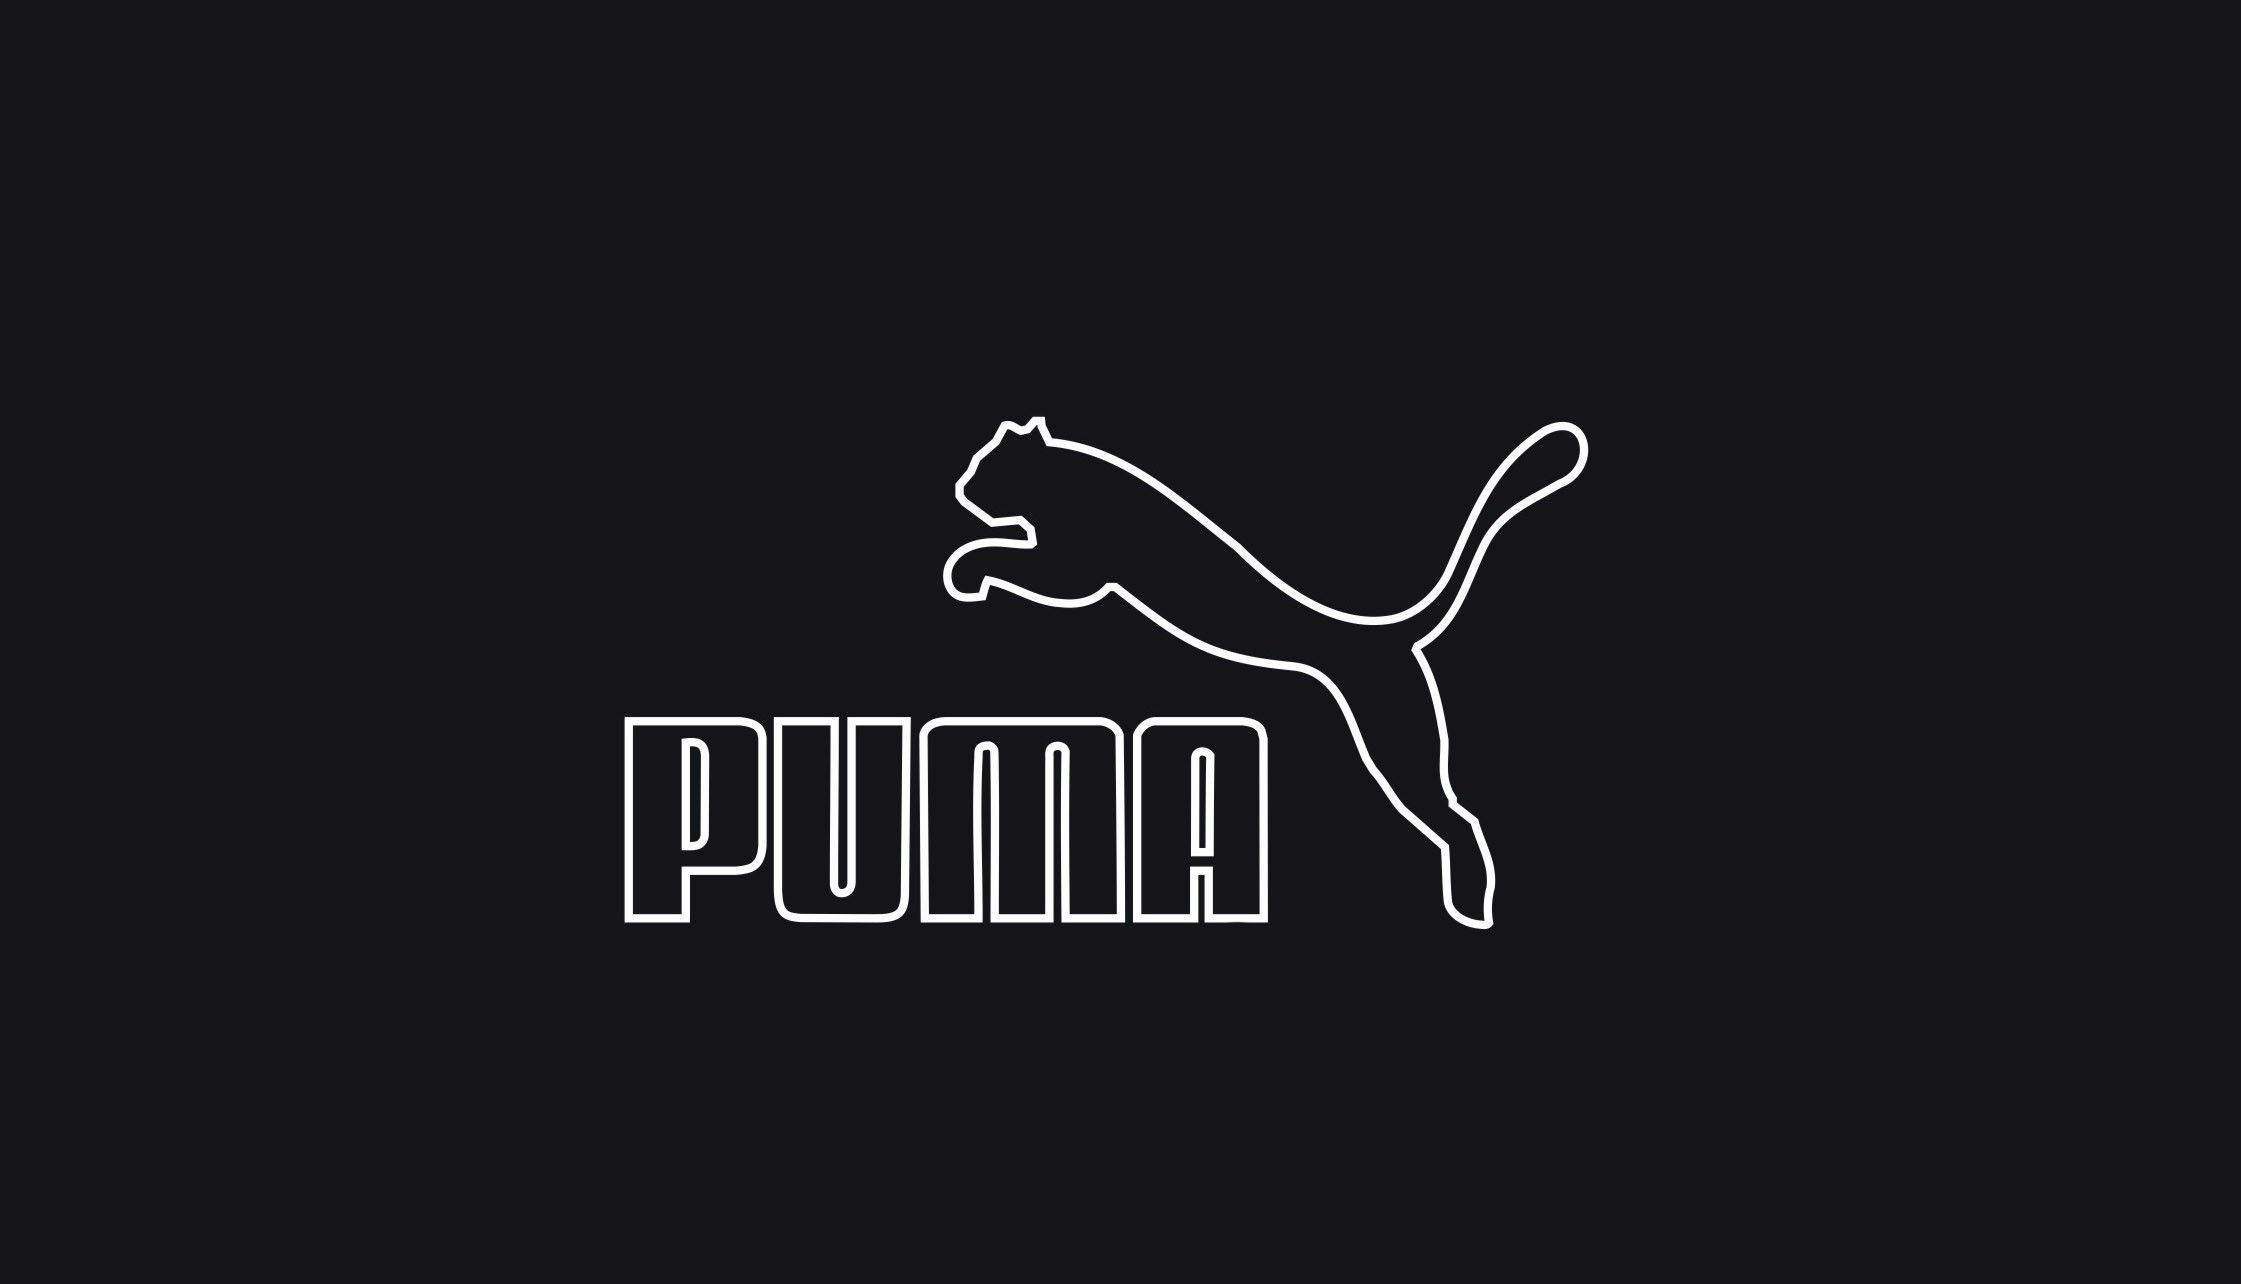 Puma Wallpaper 19 Best Free Puma Background For Desktop. Puma logo, Puma logo wallpaper, Brand logo wallpaper